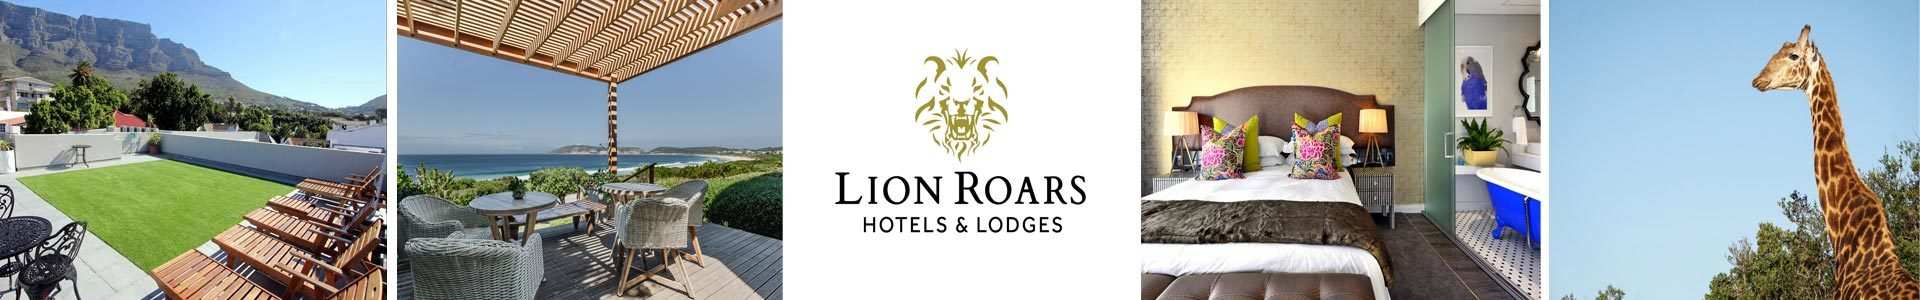 Lion Roars Banner.Lion Roars Website About Us 